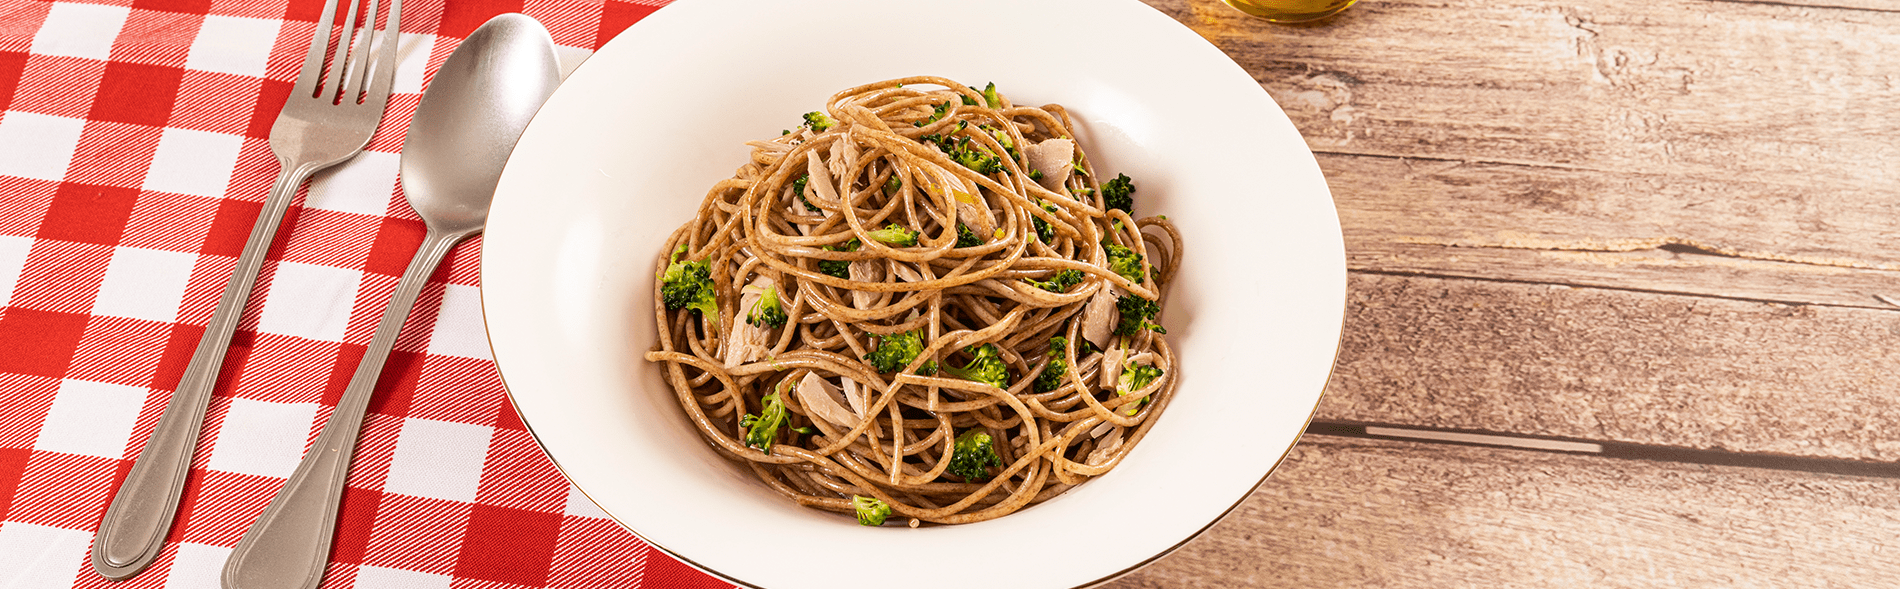 Spaghetti 5 Integral con atún y brócoli